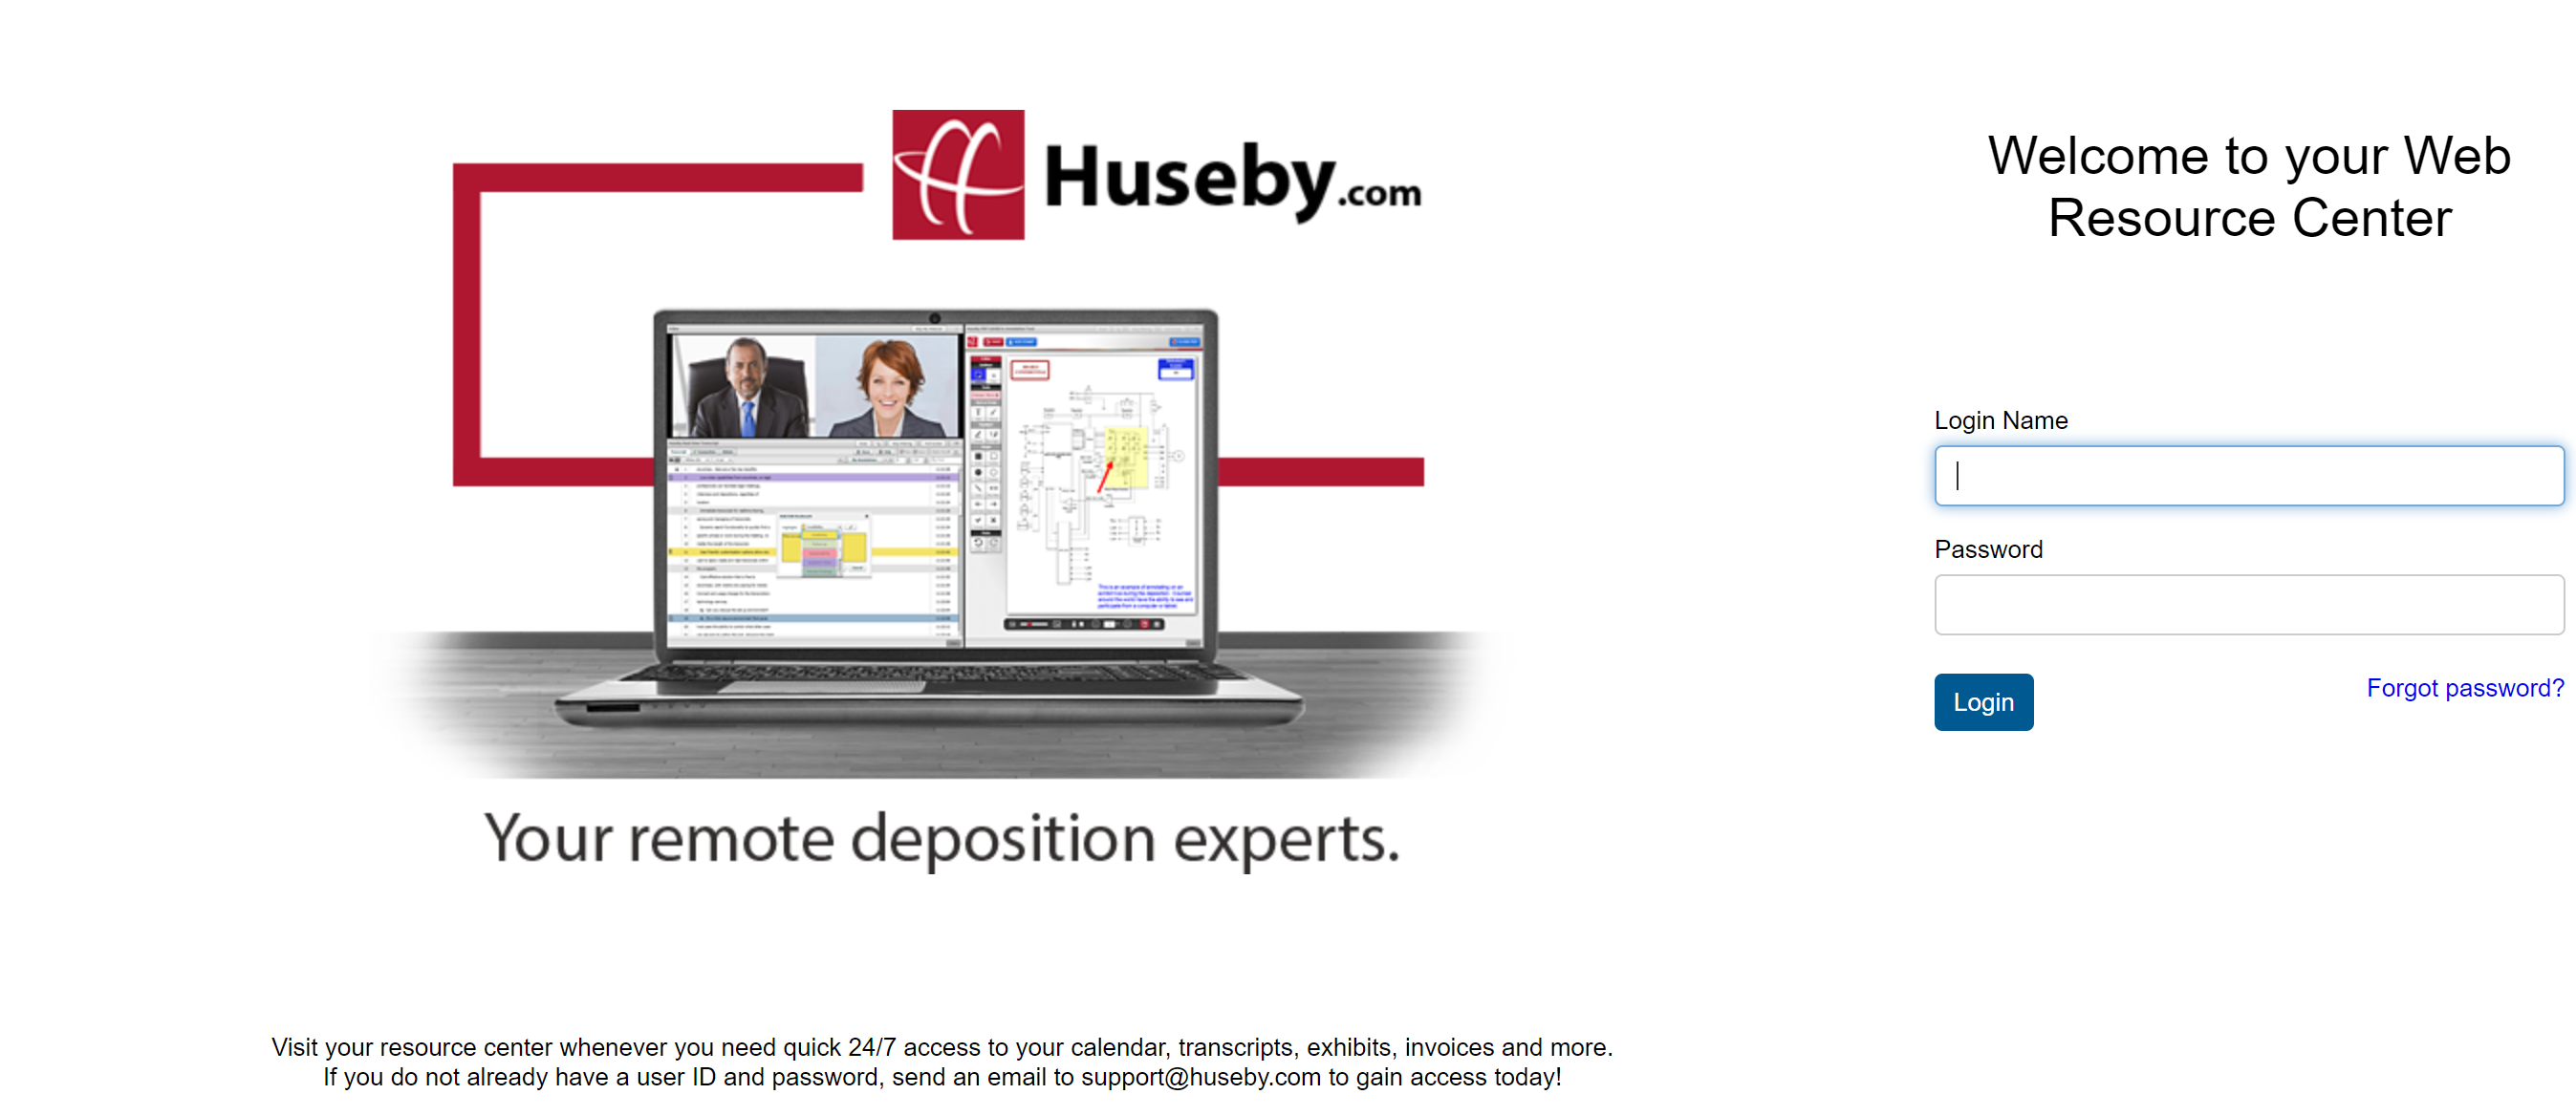 Huseby Web Resource Center